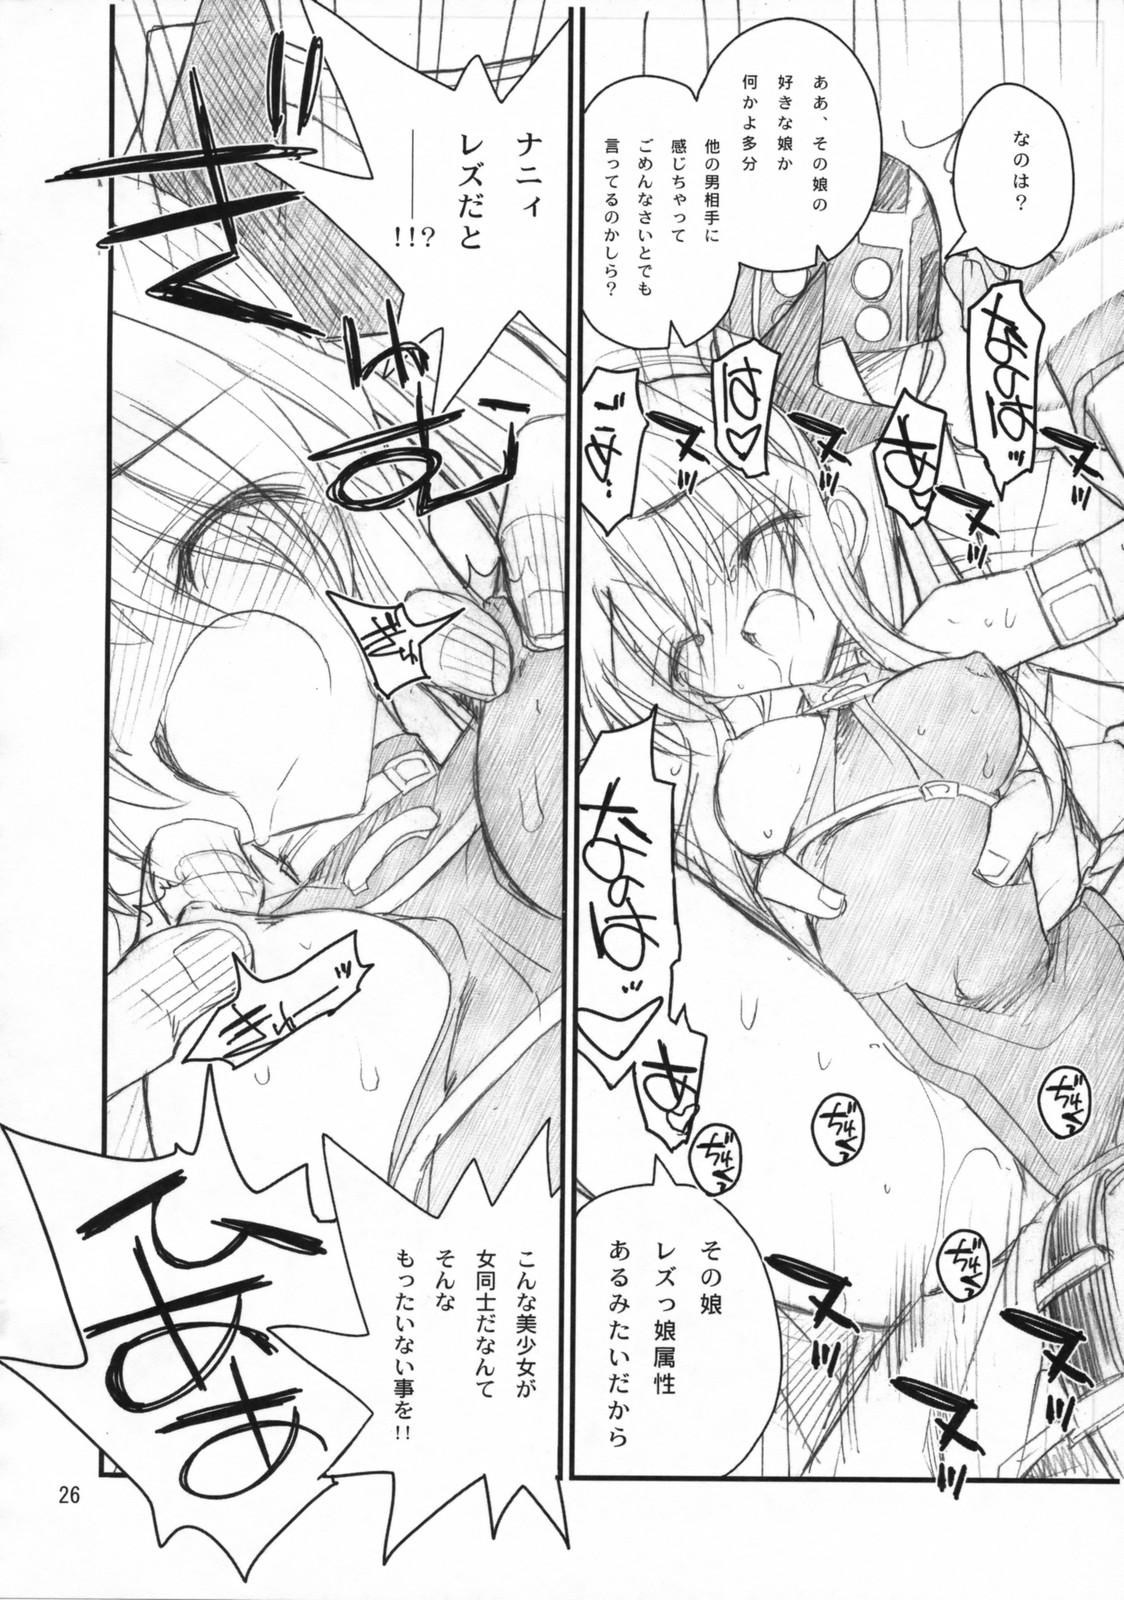 Fate-san ga Mae kara Ushiro kara 24